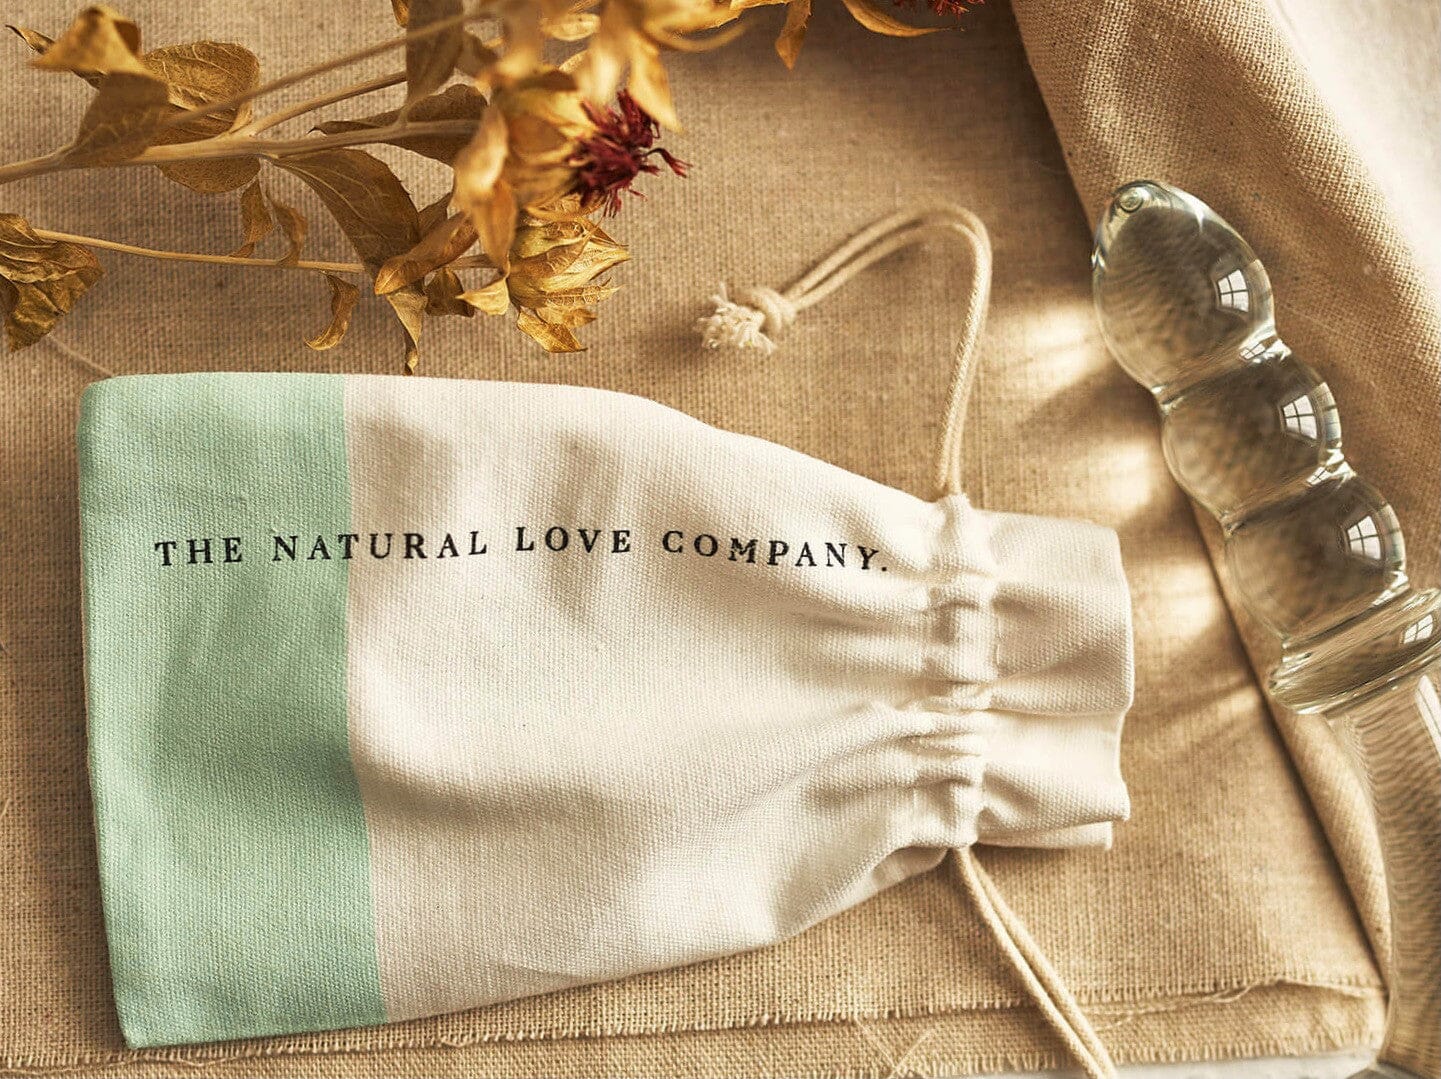 The Natural Love Company